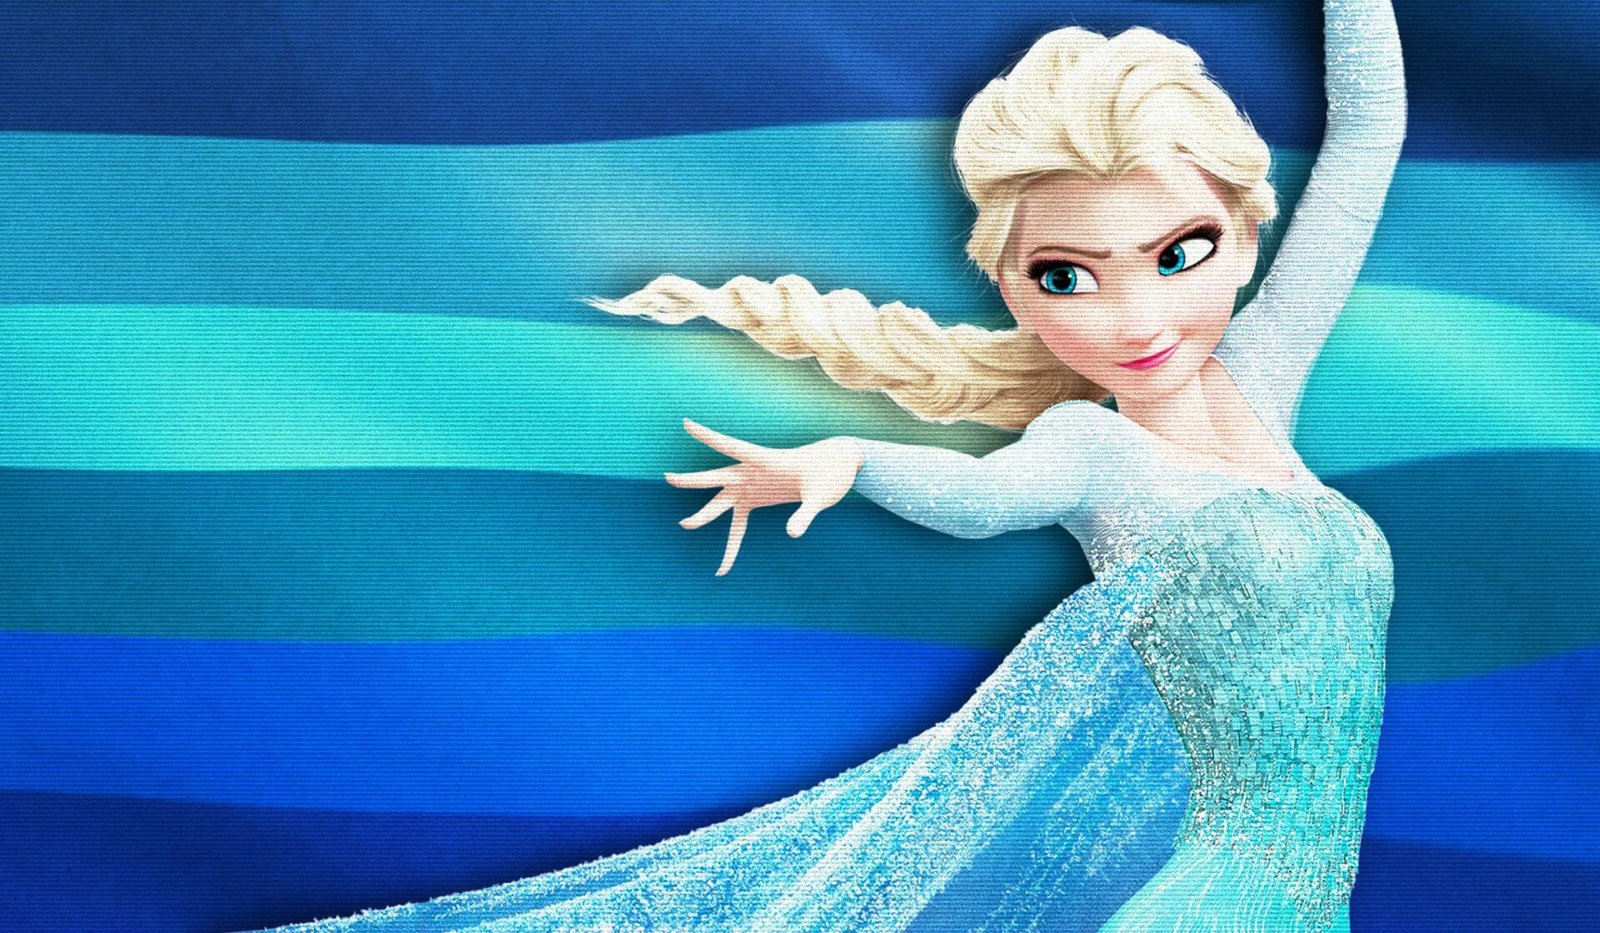 Best Disney princess: Elsa - Frozen